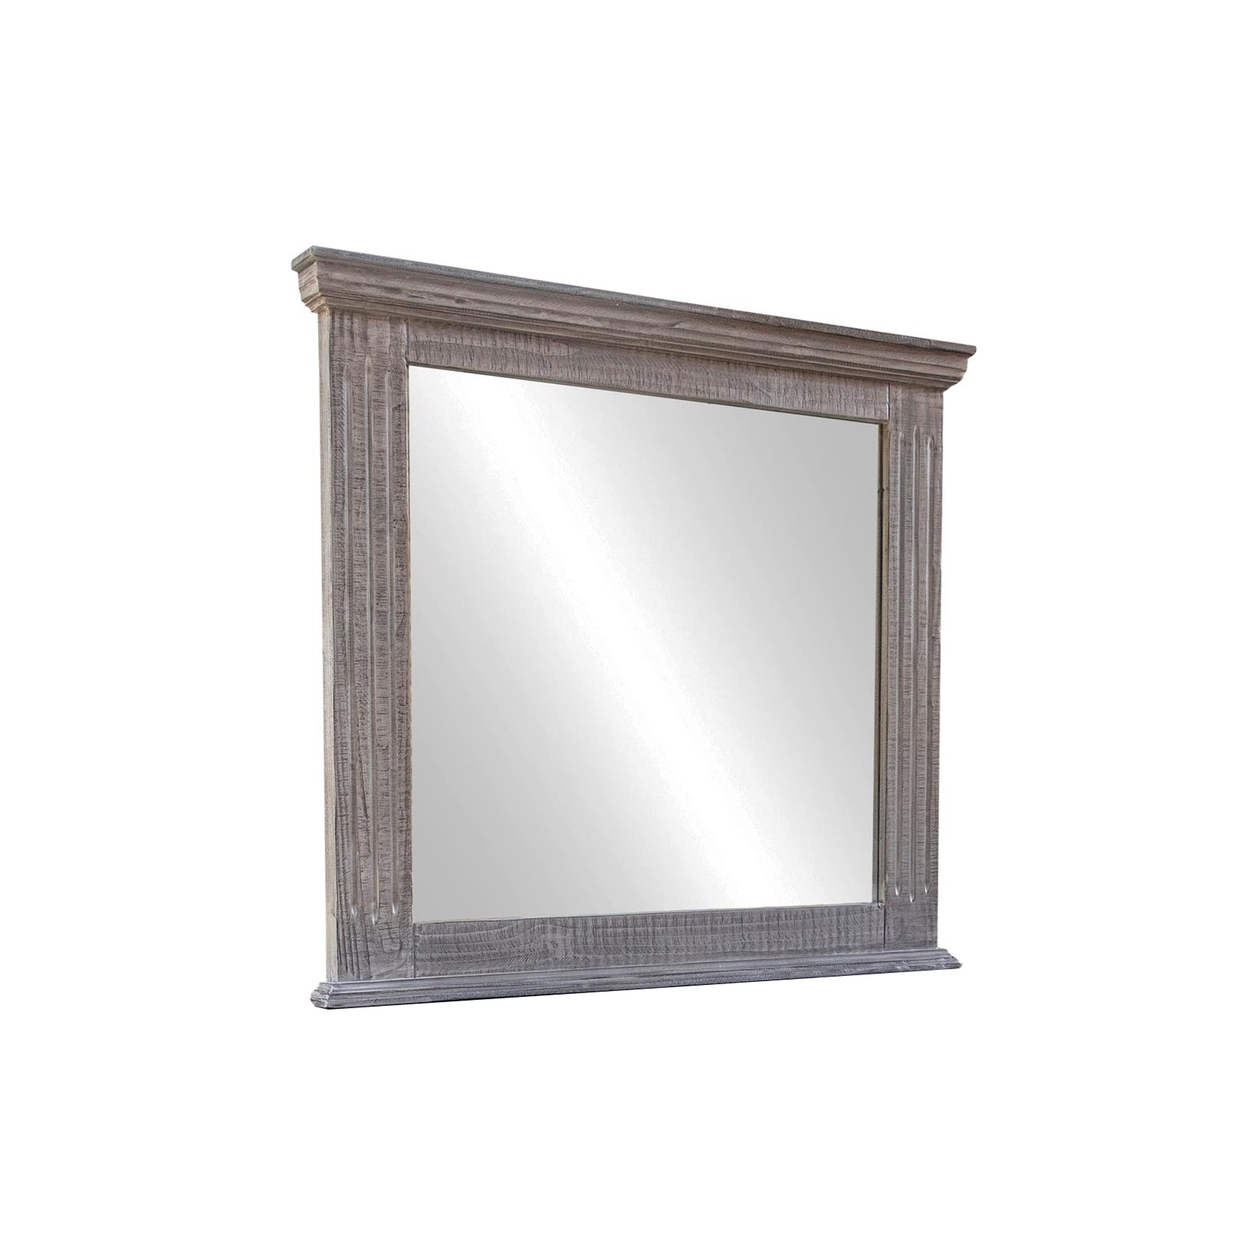 Abi 47 Inch Classic Mirror, Multistep Lacquer, Gray Distressed Wood Frame- Saltoro Sherpi